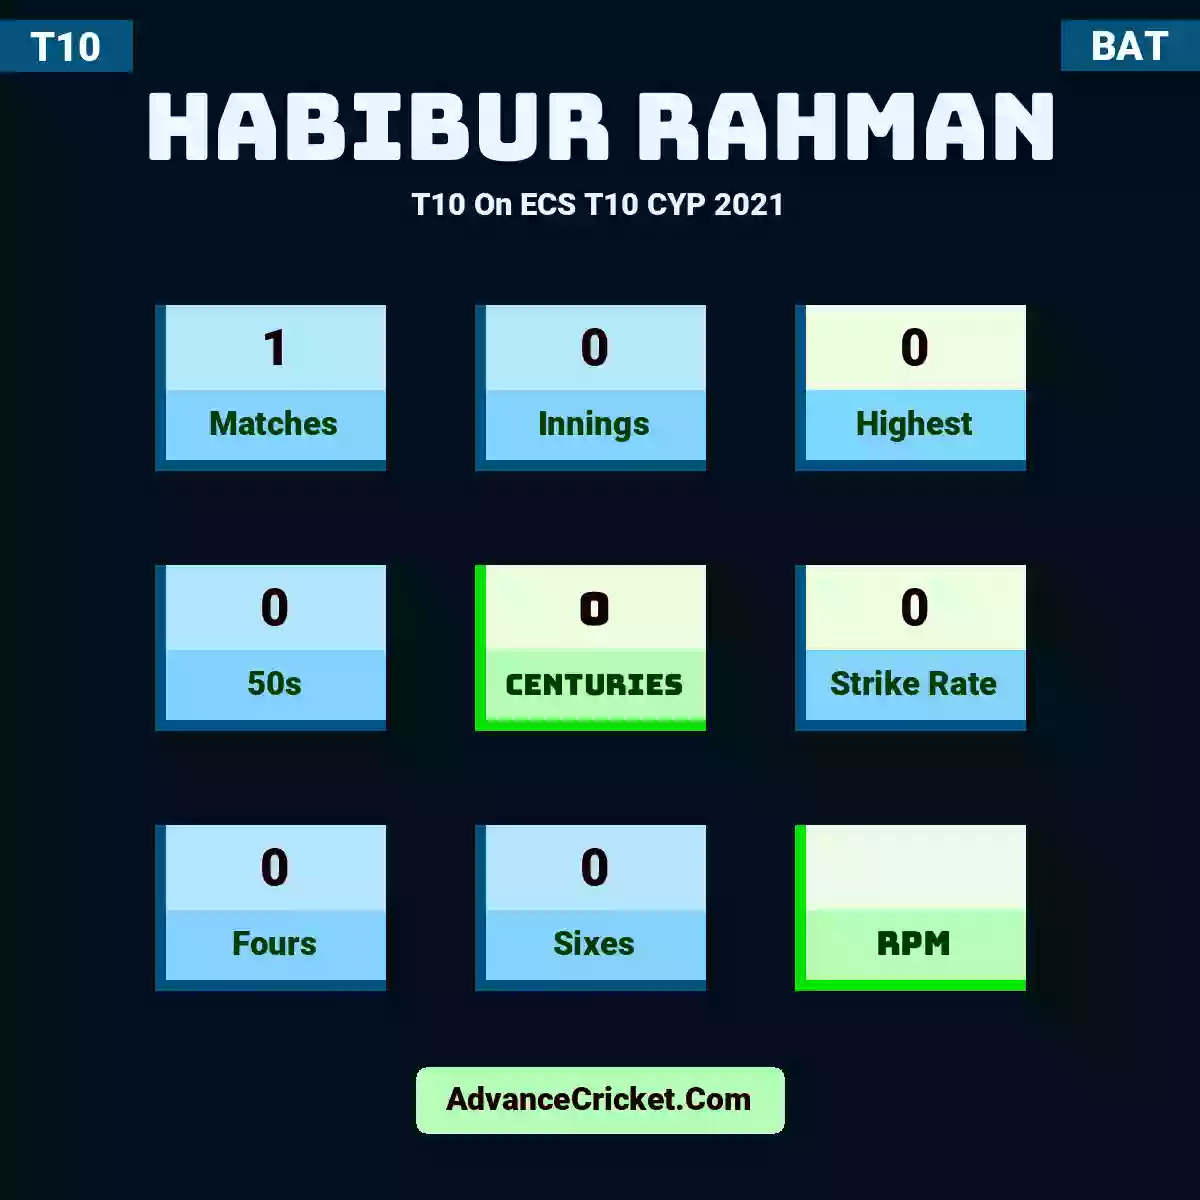 Habibur Rahman T10  On ECS T10 CYP 2021, Habibur Rahman played 1 matches, scored 0 runs as highest, 0 half-centuries, and 0 centuries, with a strike rate of 0. H.Rahman hit 0 fours and 0 sixes.